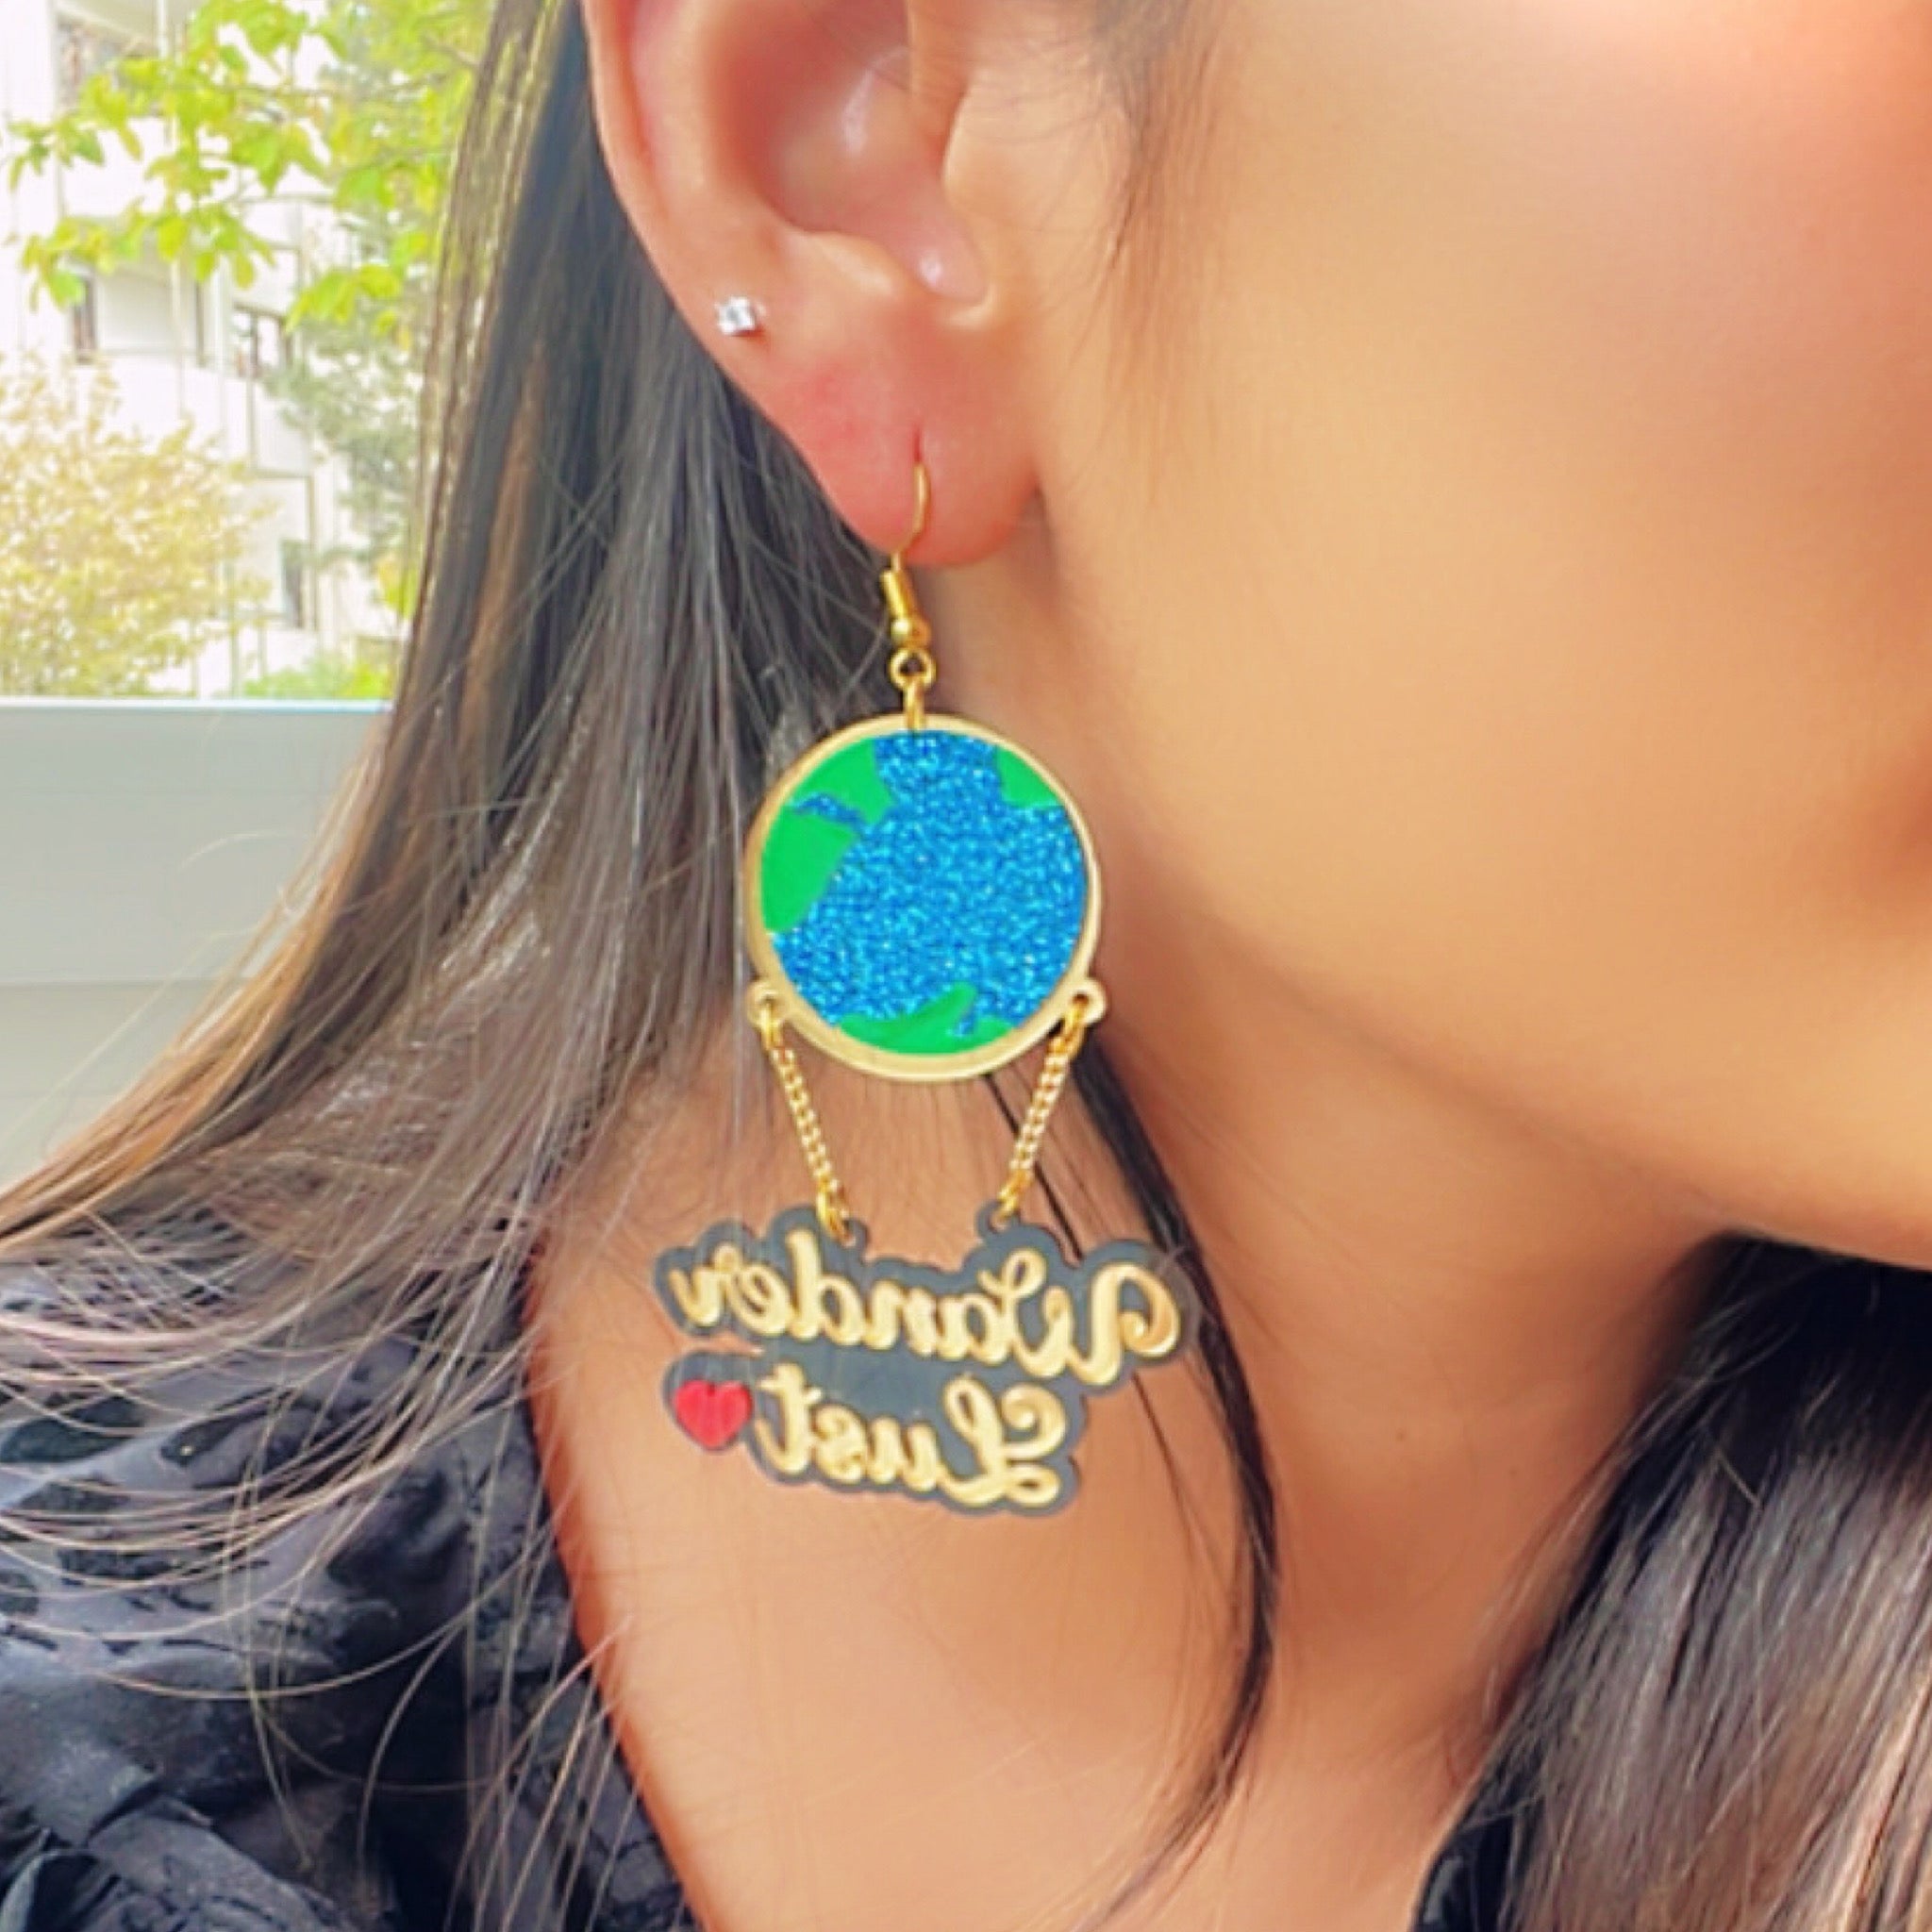 Wanderlust Earrings - Multicolor - Green, Shimmer Blue, Glossy Golden - Nian by Nidhi - worn by a woman